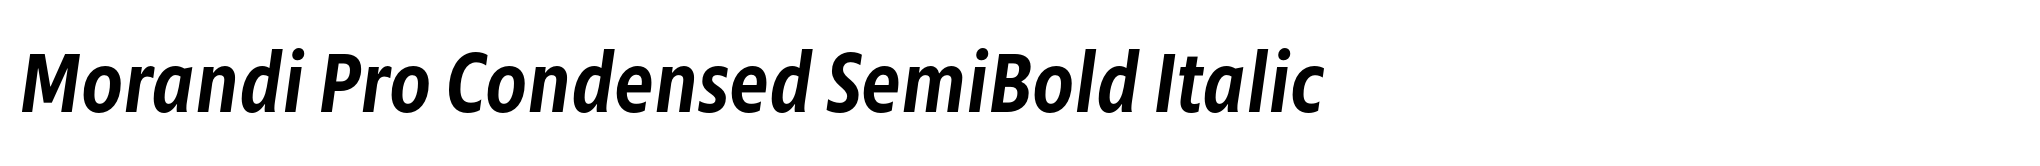 Morandi Pro Condensed SemiBold Italic image